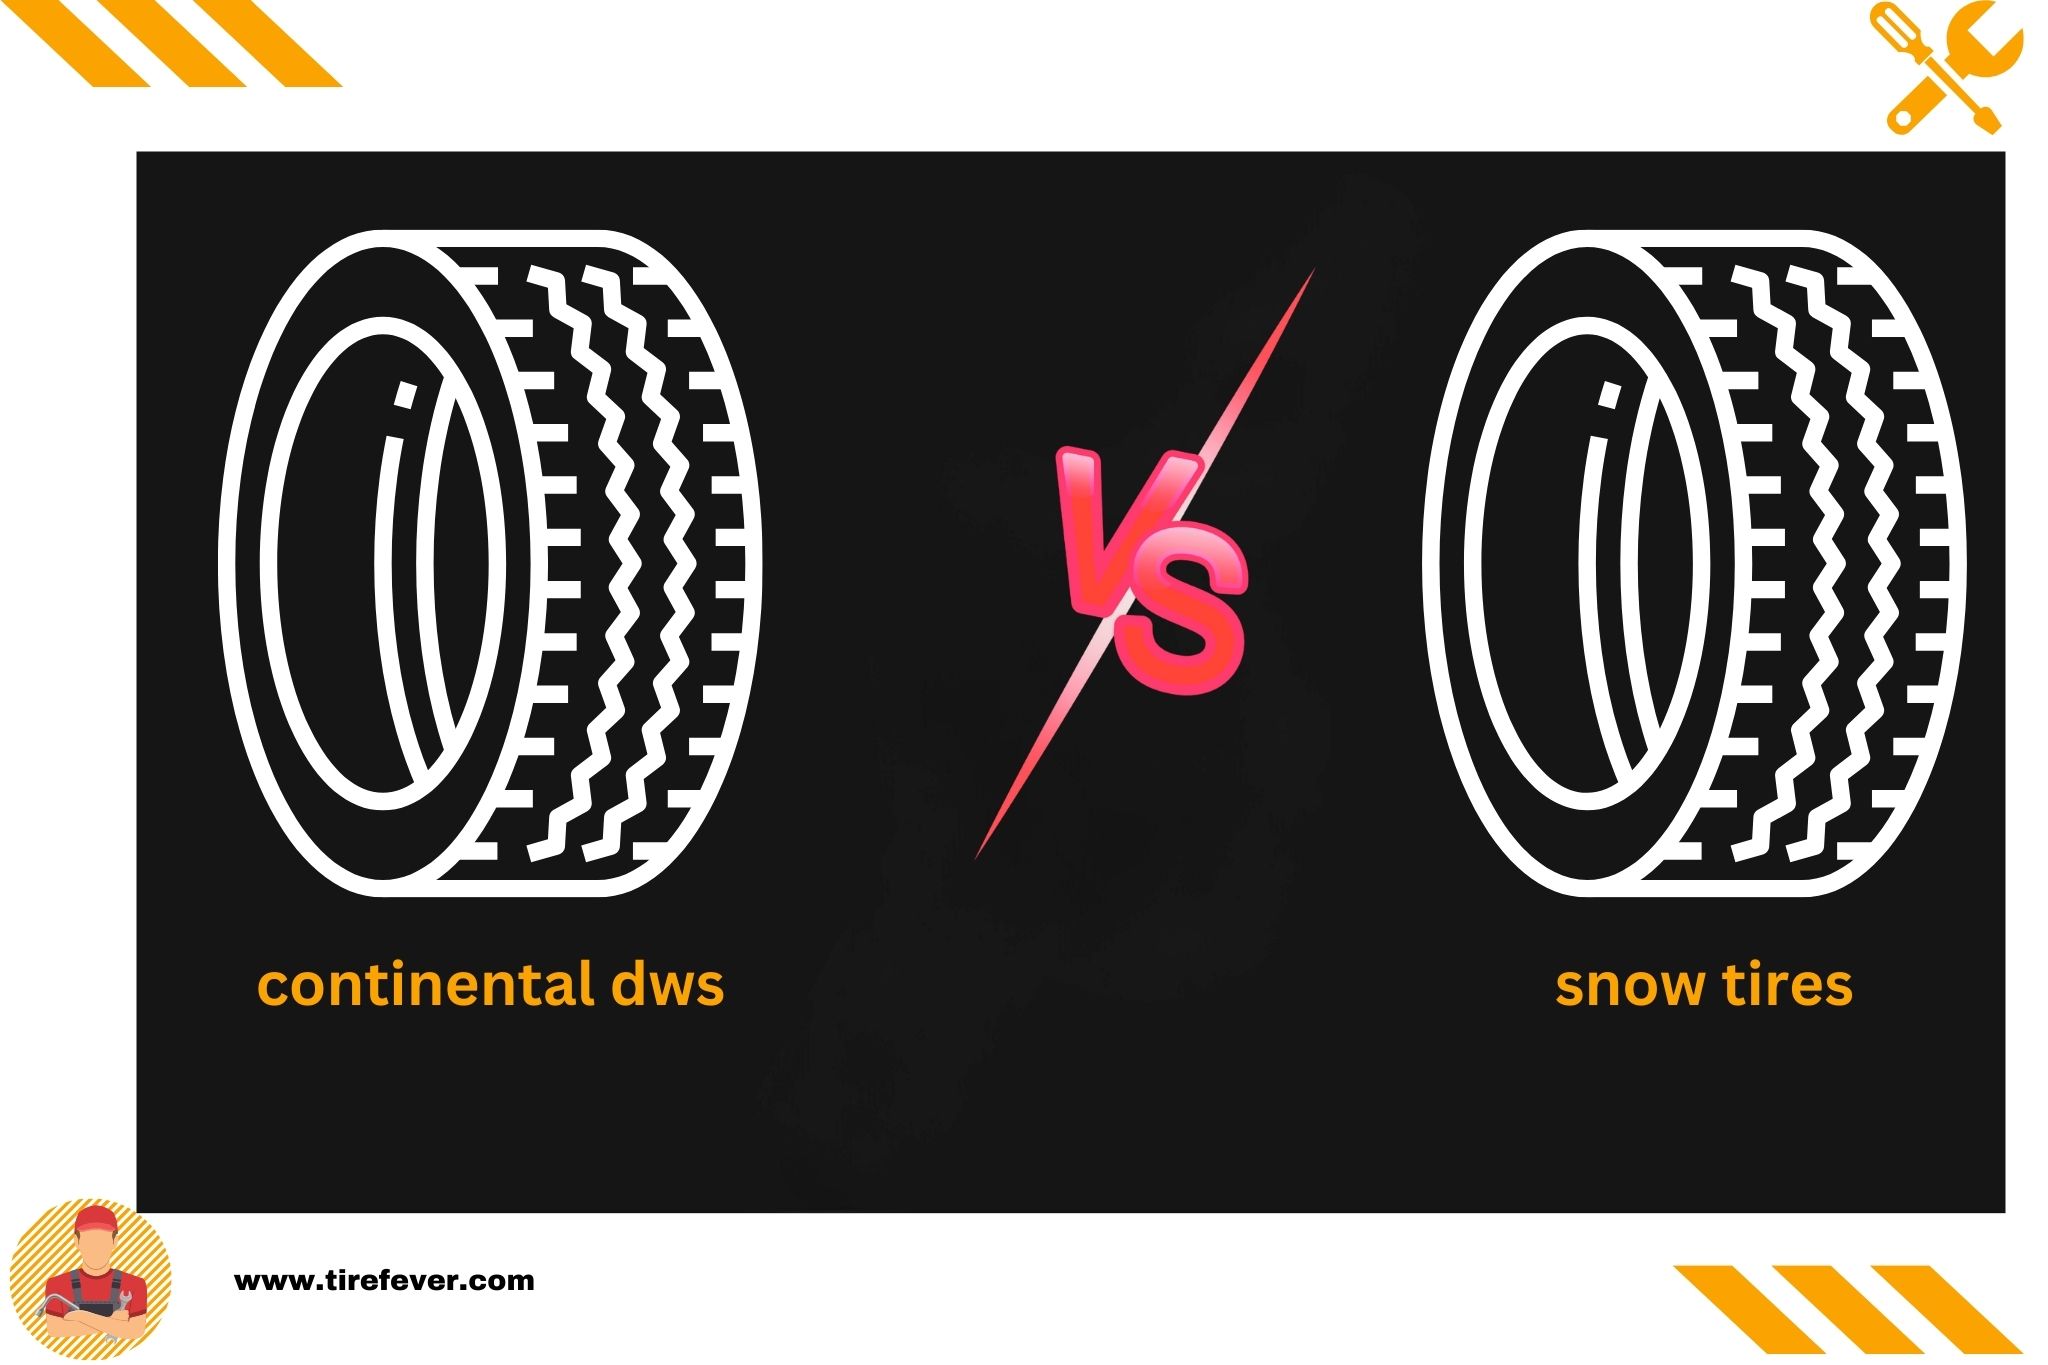 continental dws vs snow tires